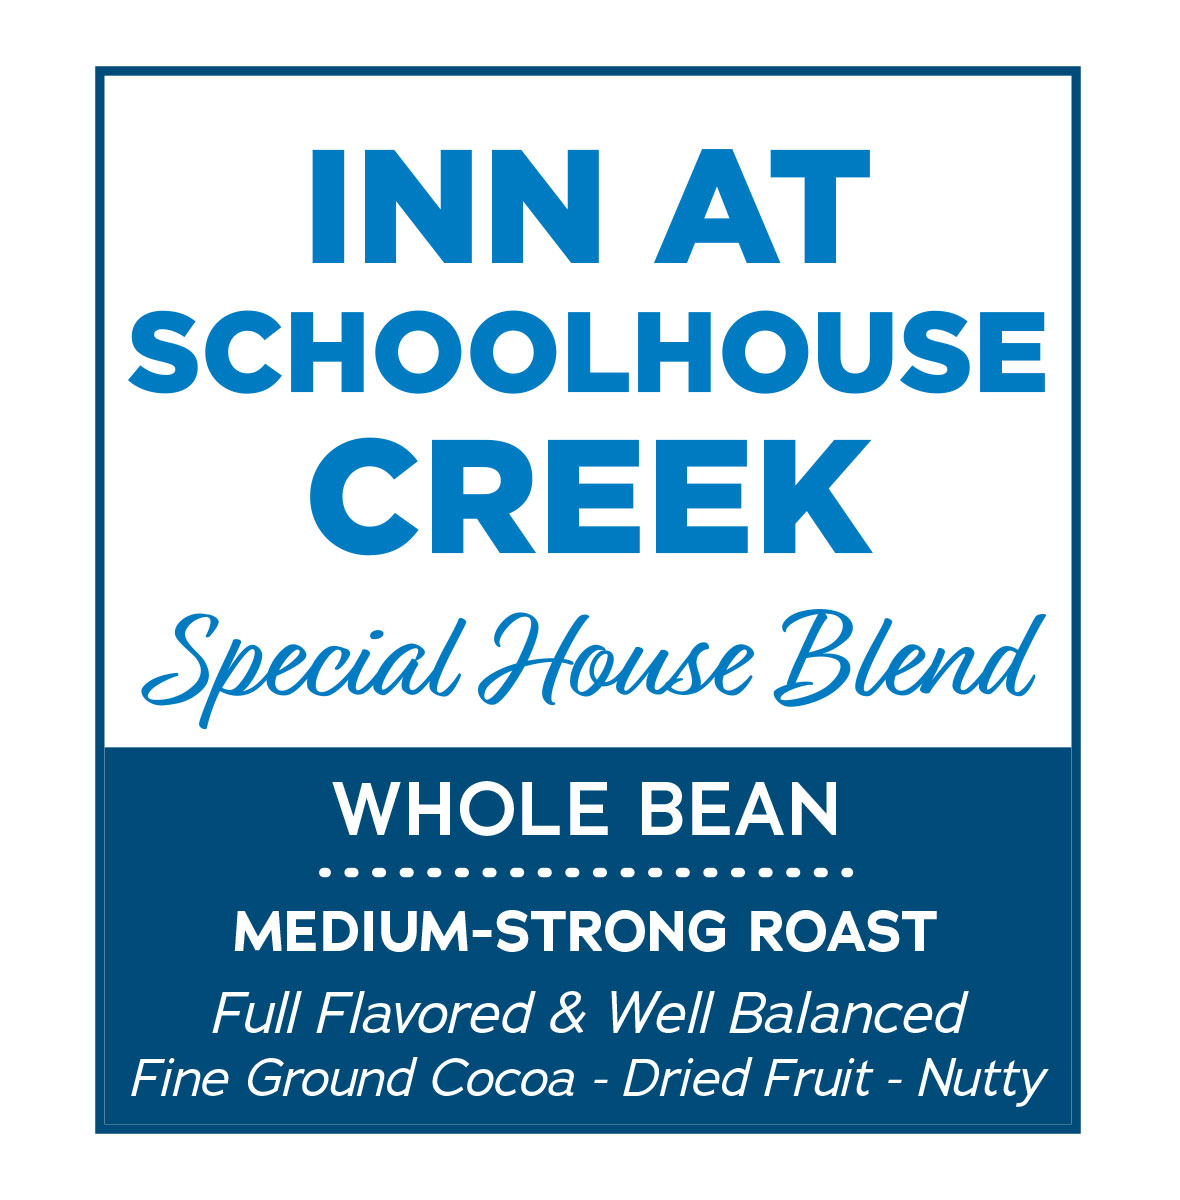 Inn at Schoolhouse Creek Blend Organic